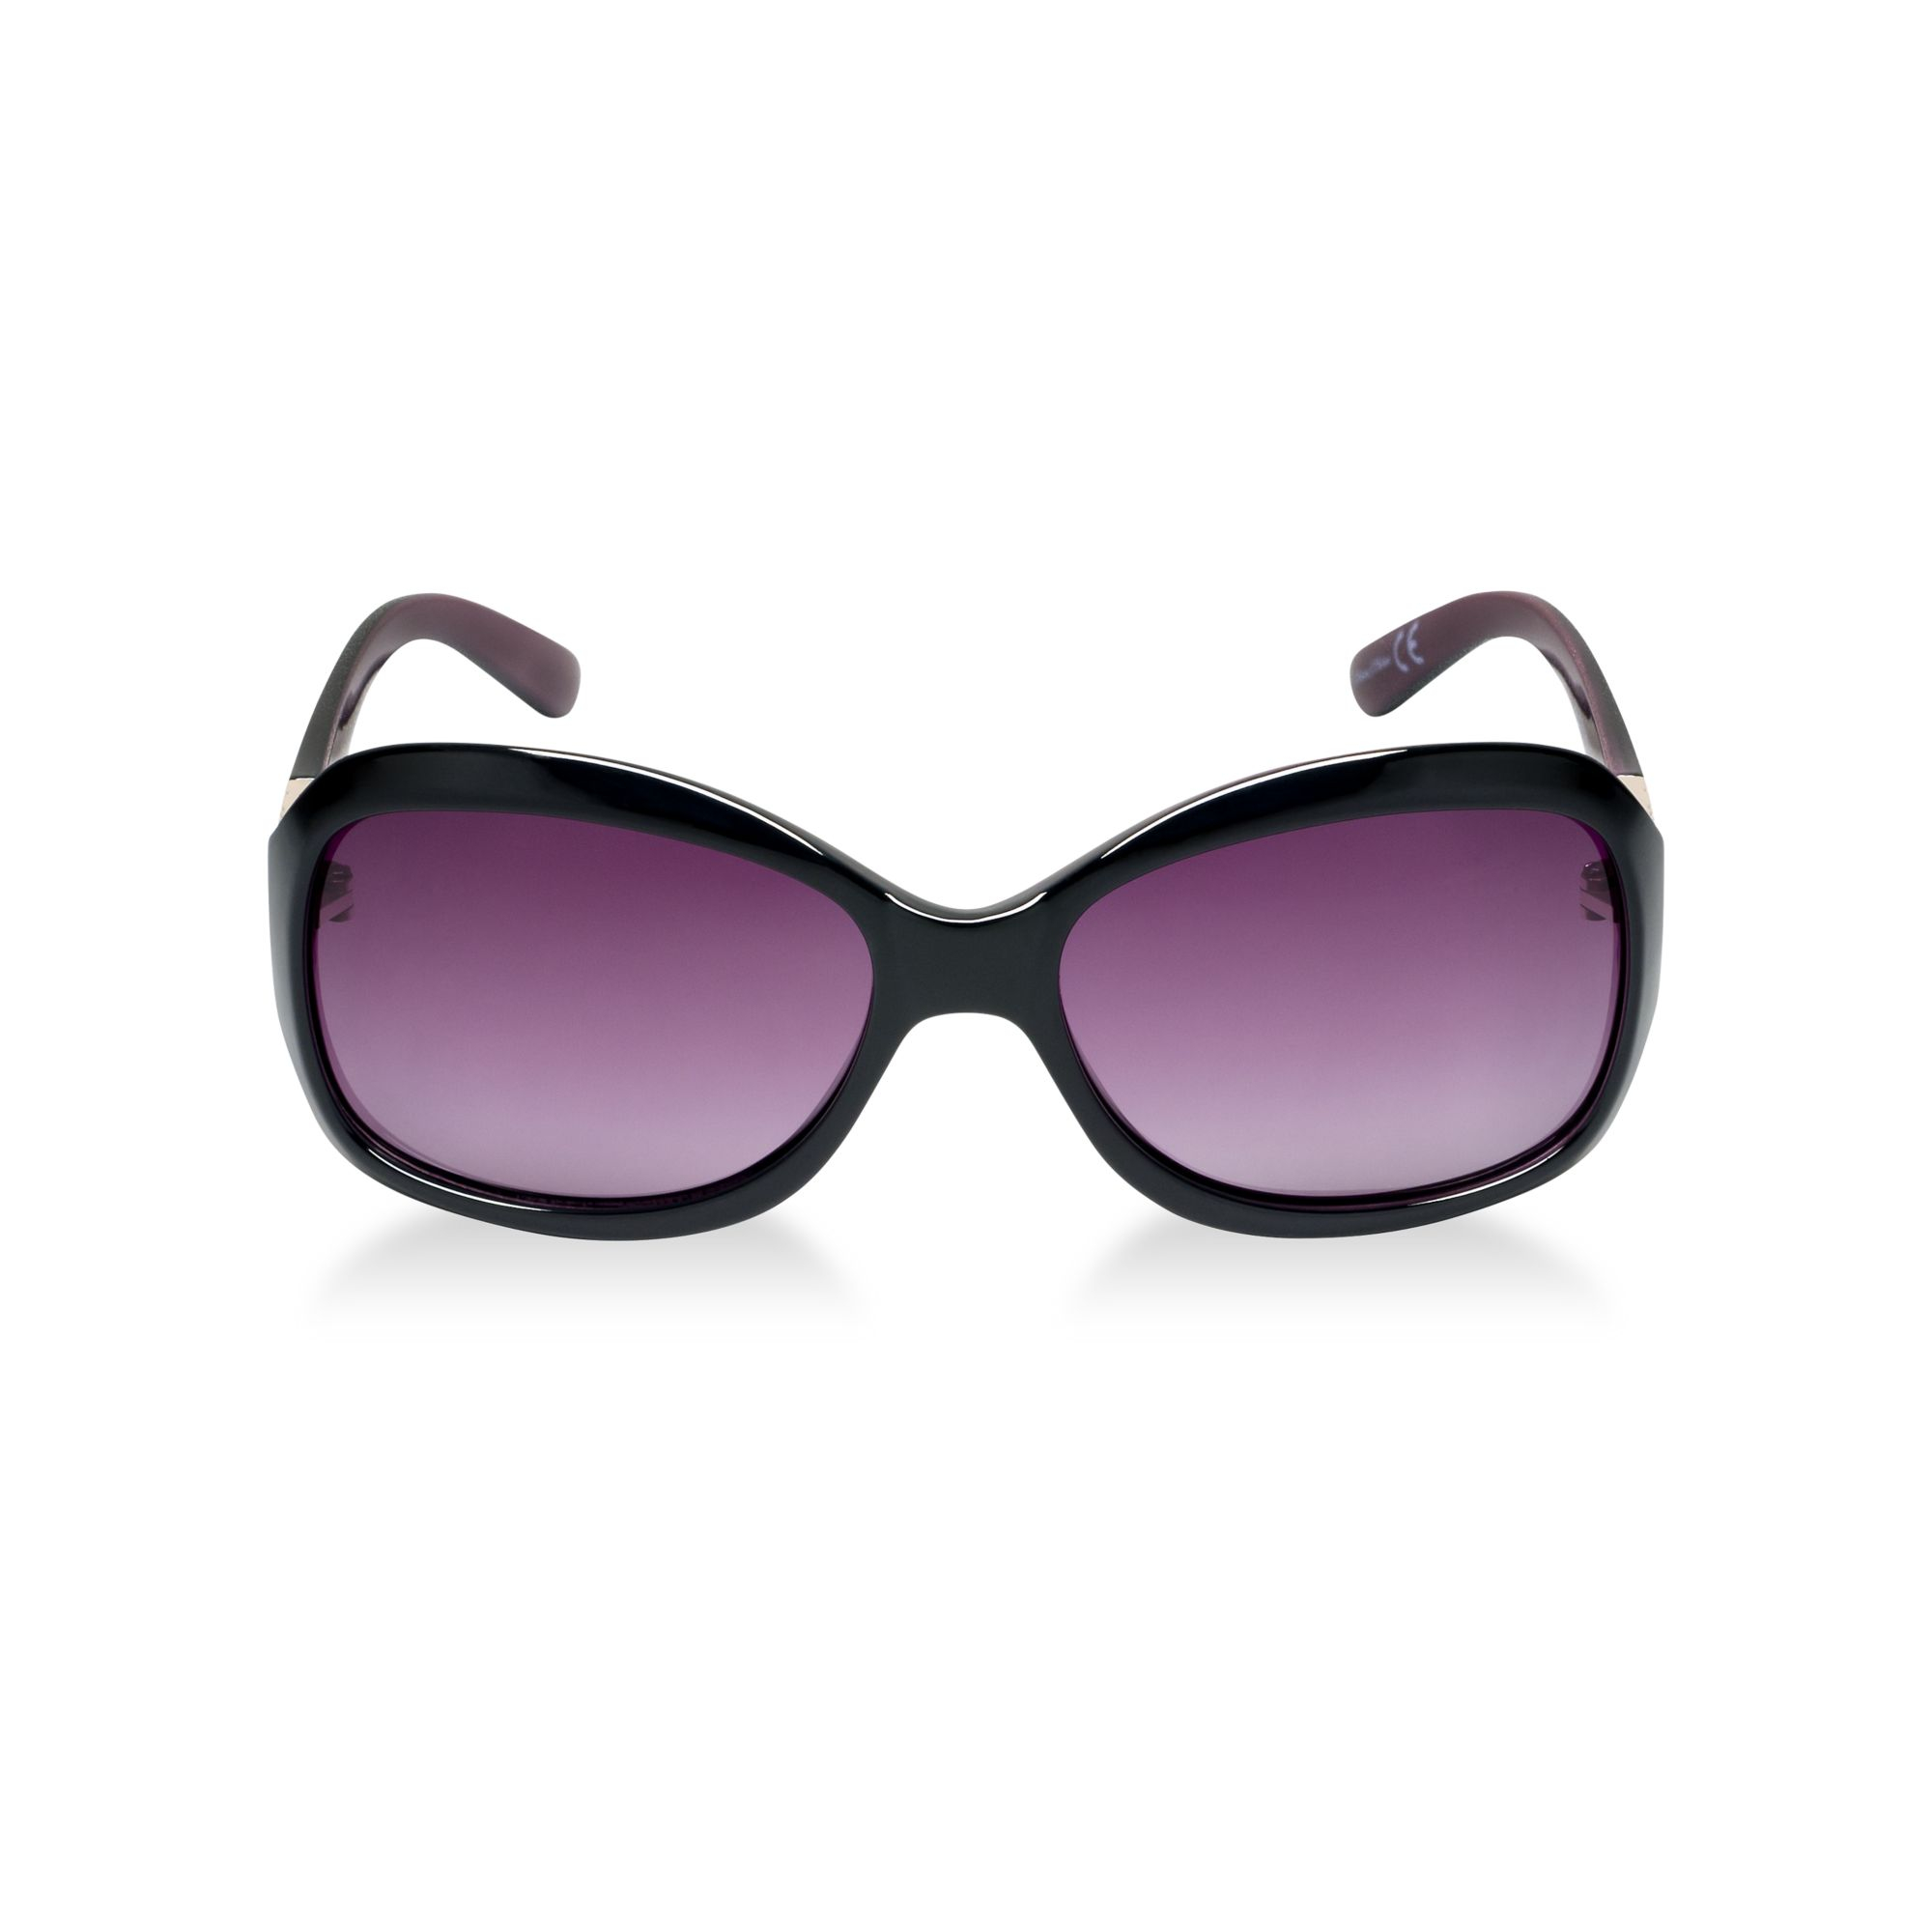 Lyst - Nine West Nine West Sunglasses in Purple